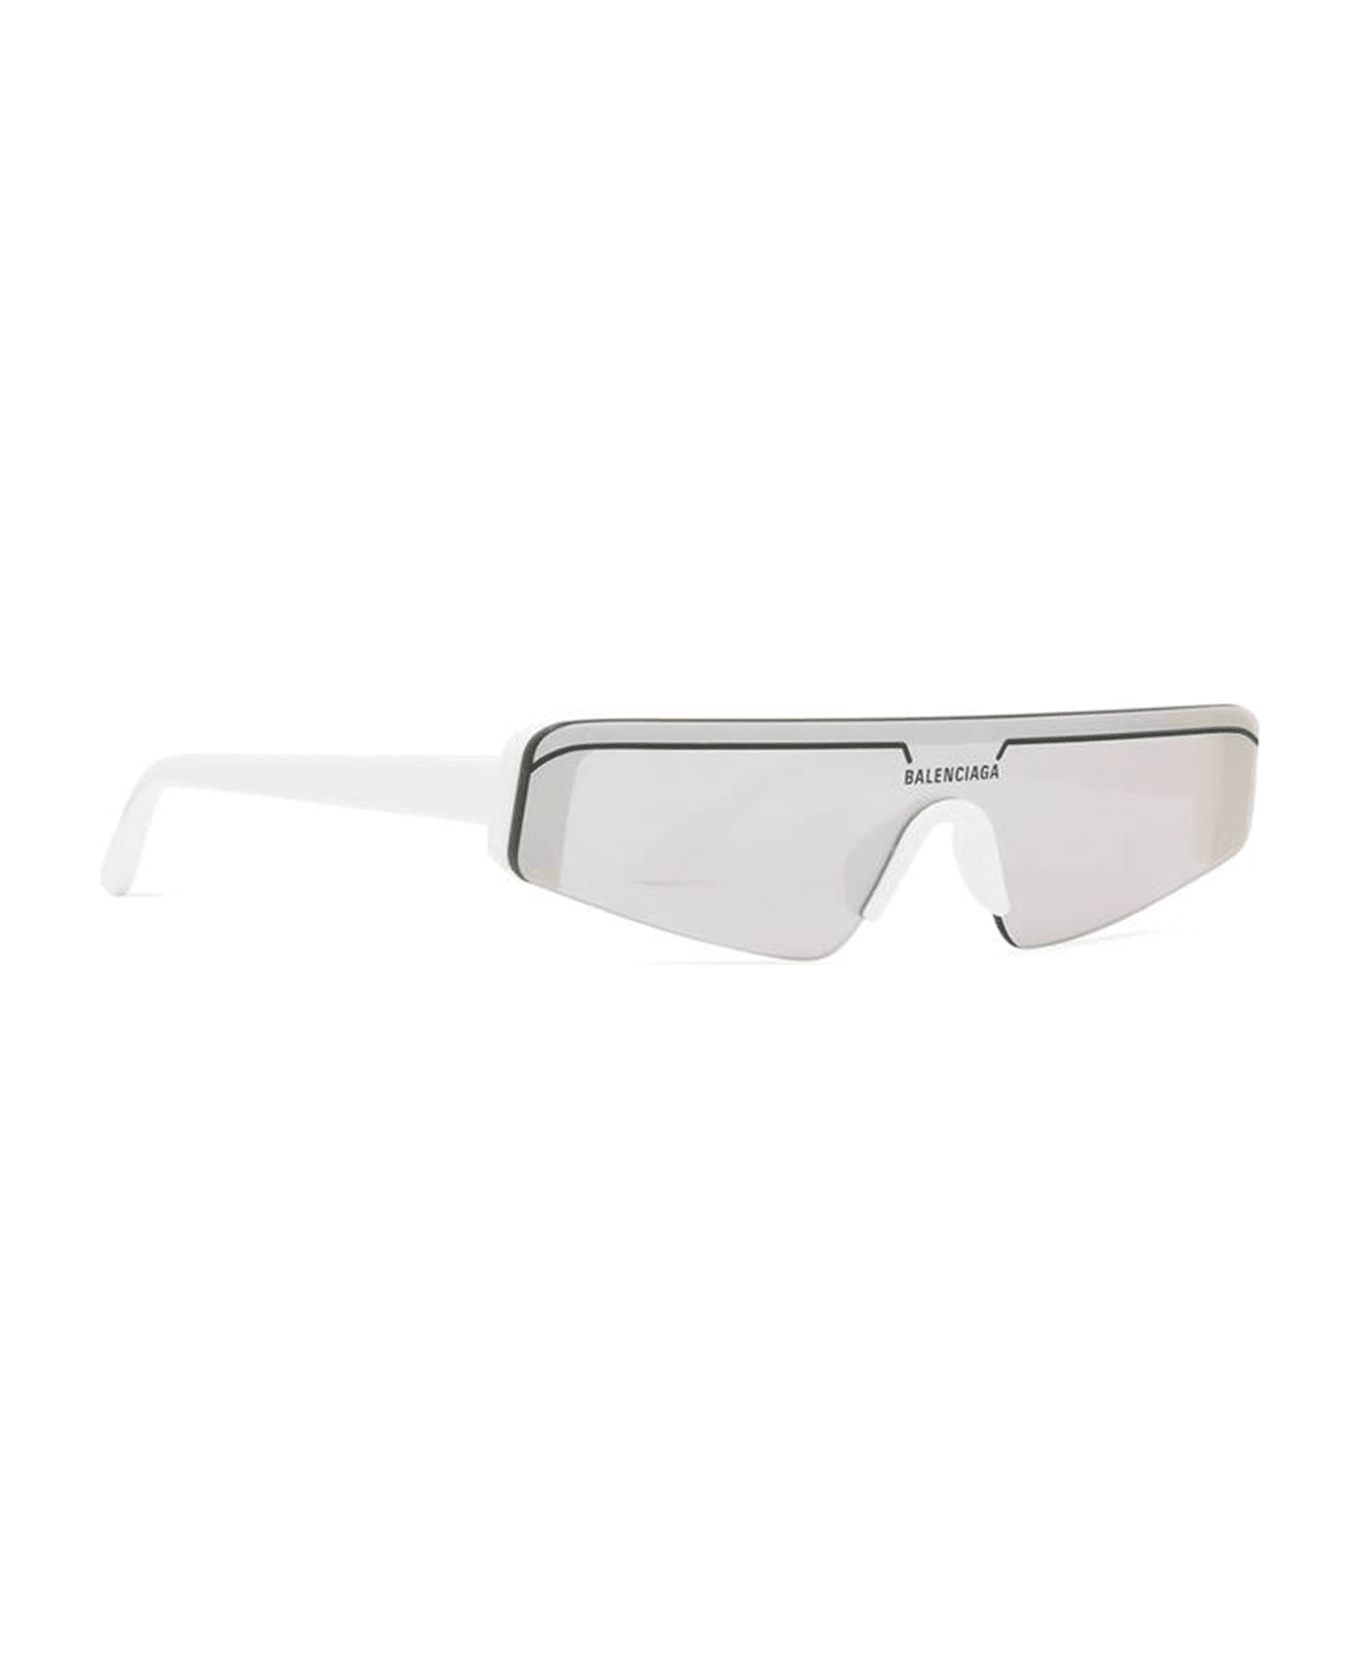 Balenciaga Eyewear Bb0003s Linea Extreme 002 Sunglasses - White